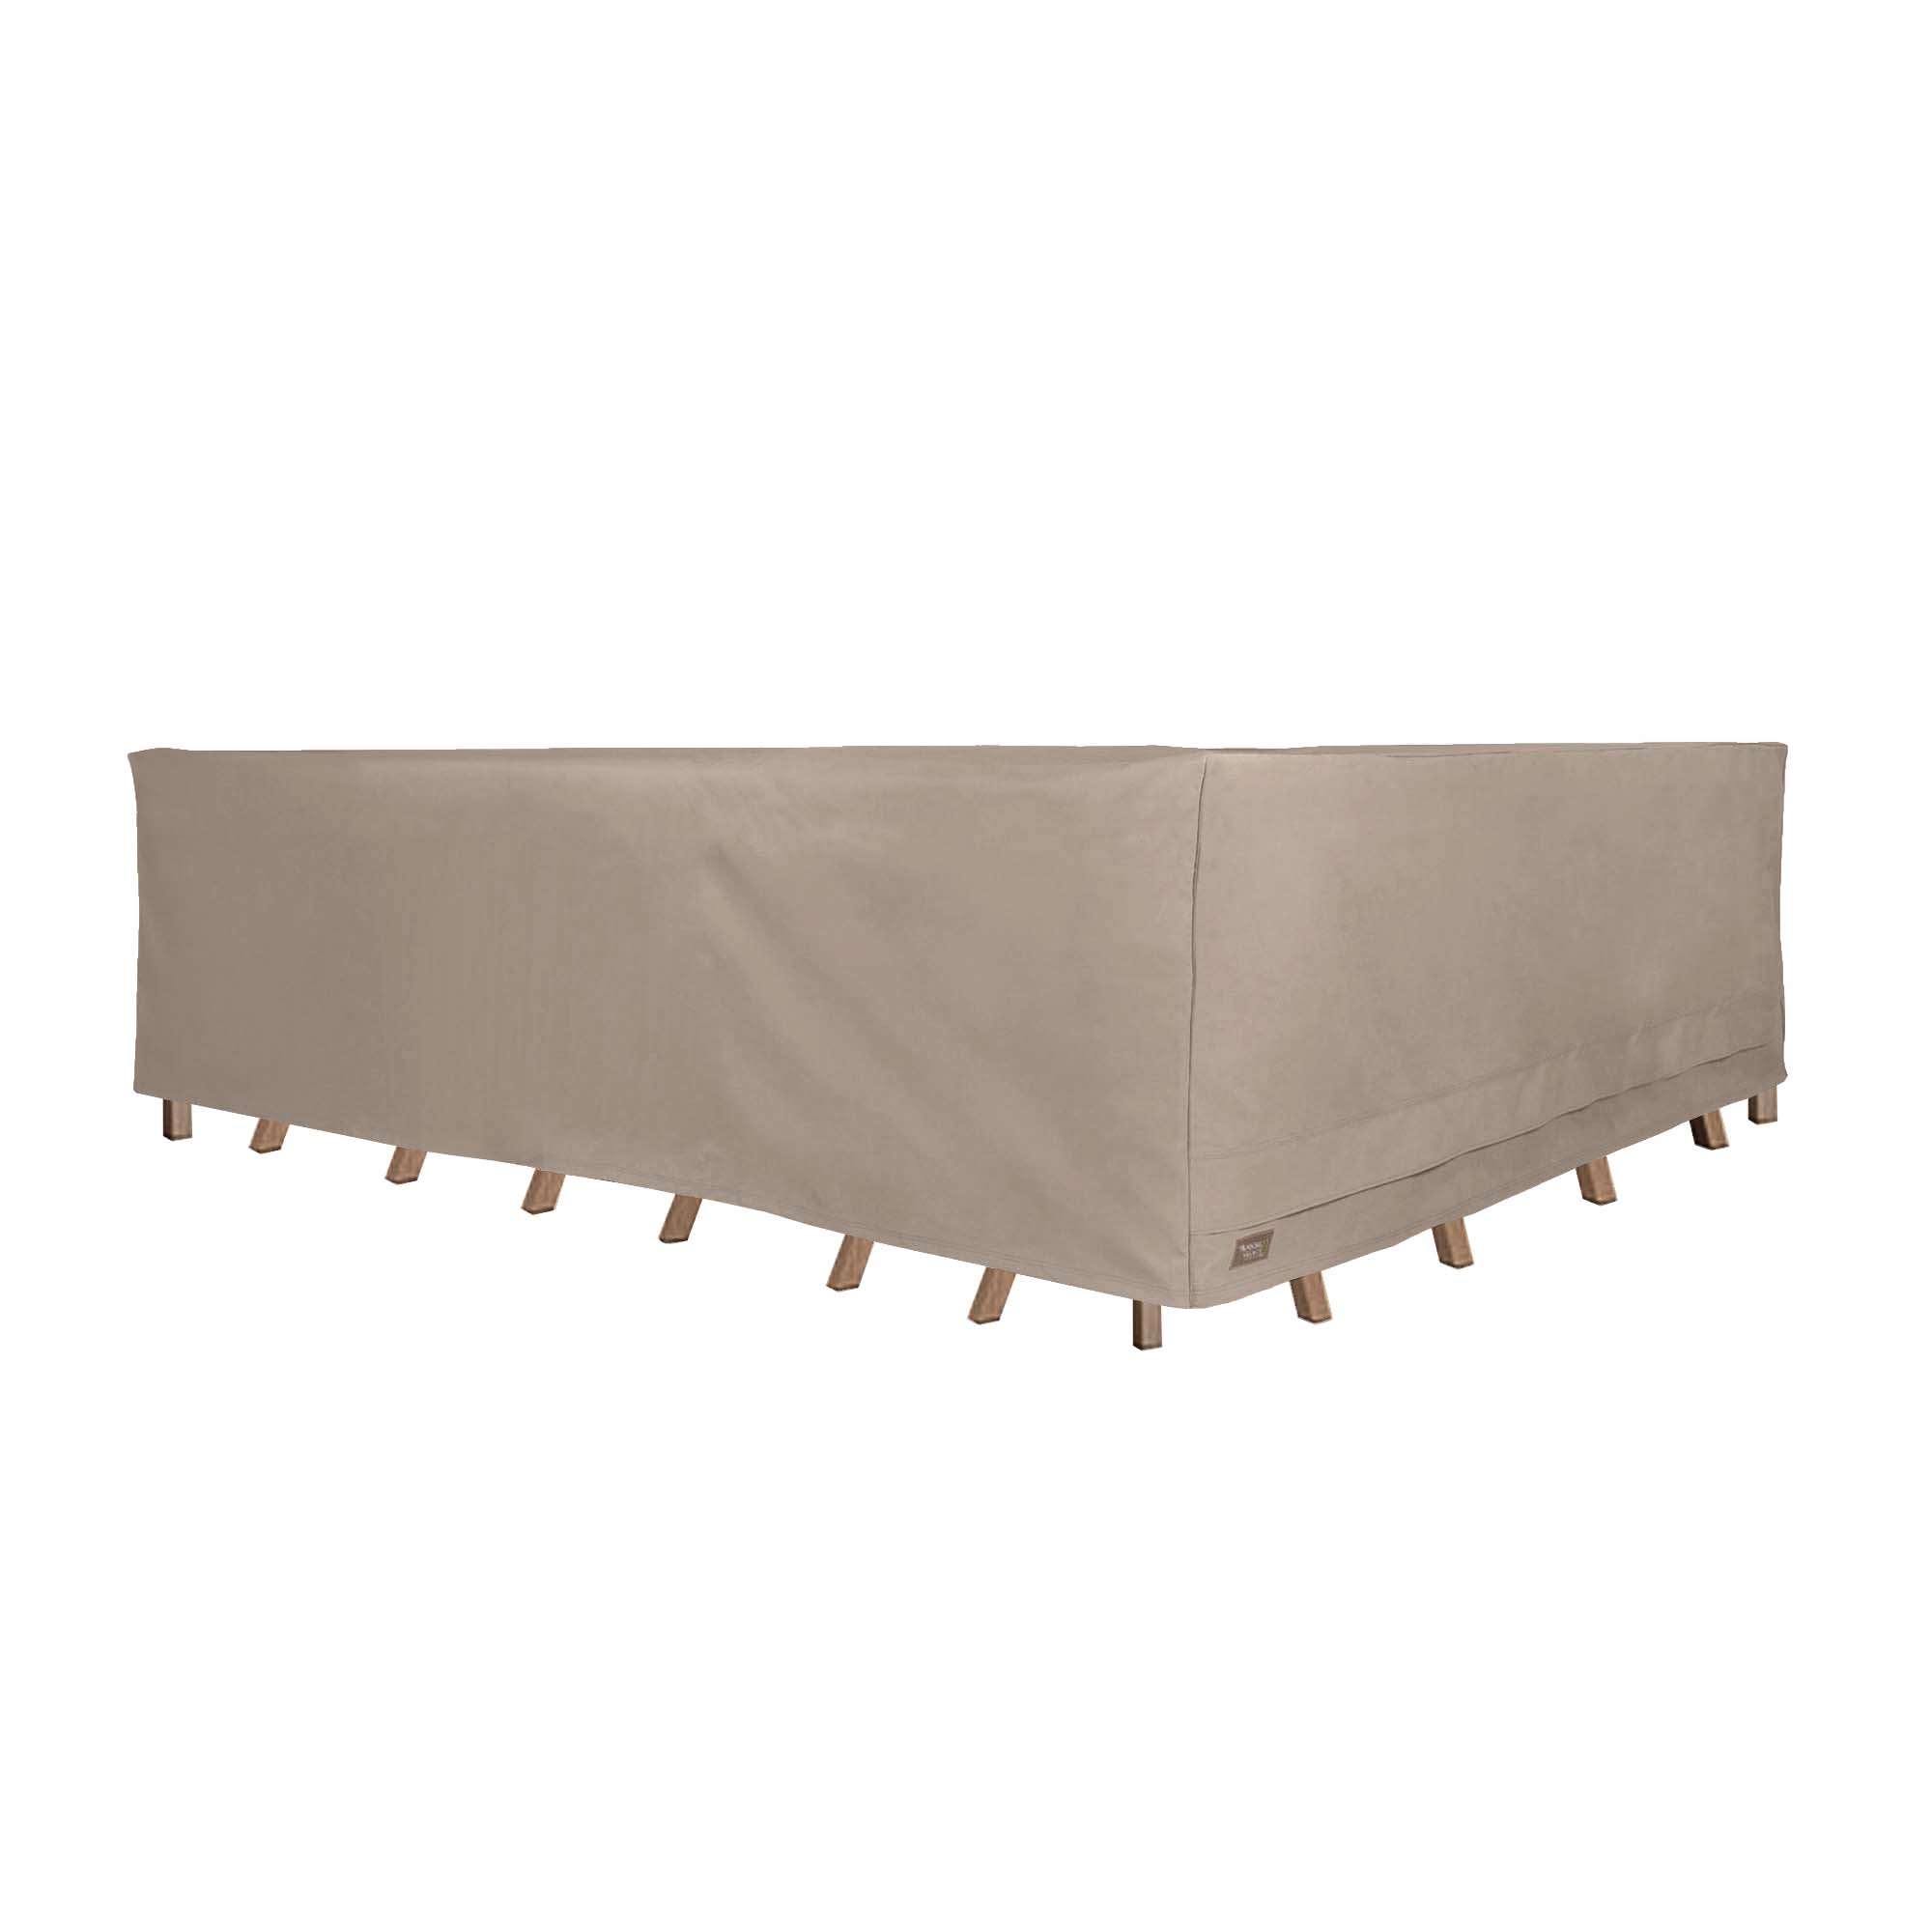 Rectangular Patio Table Set Cover